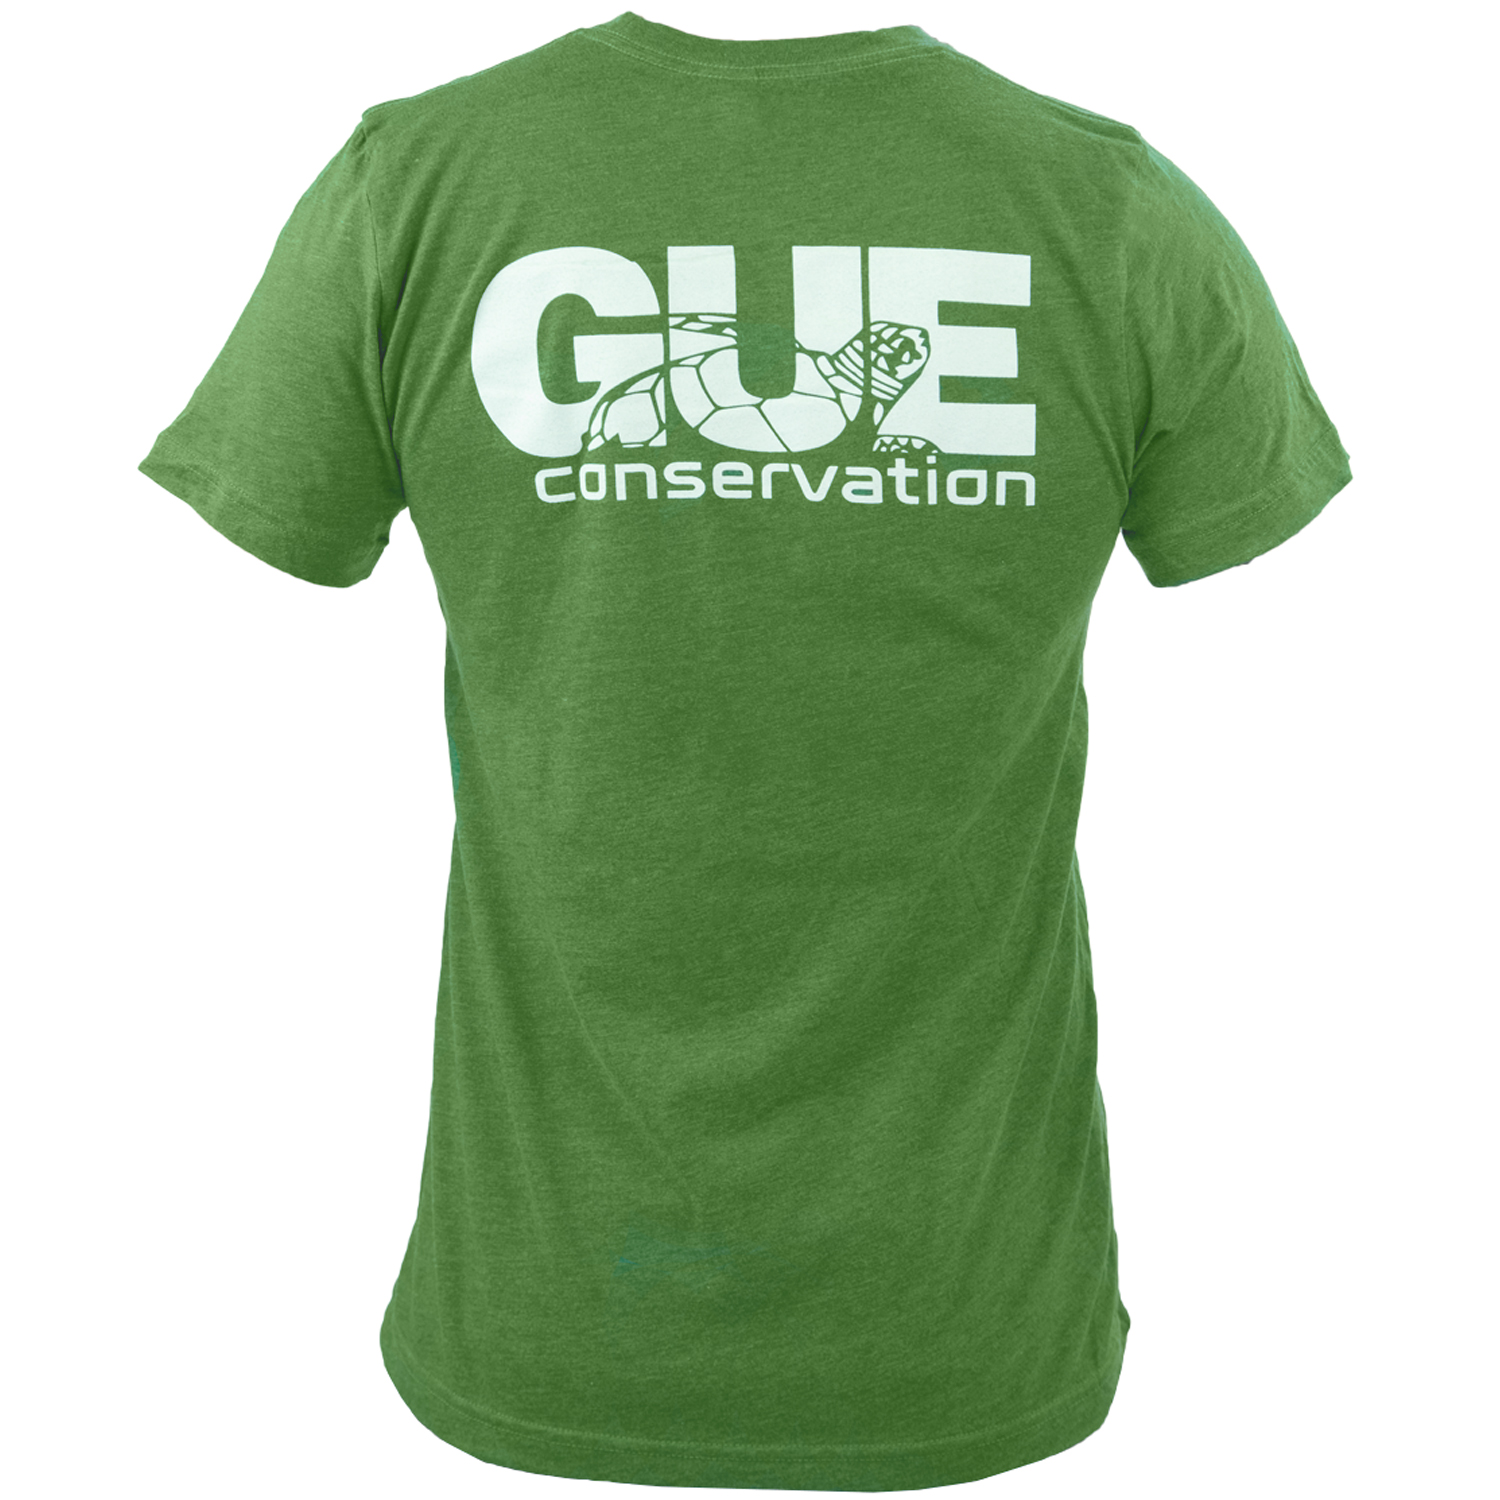 GUE Mission T-Shirt Conservation